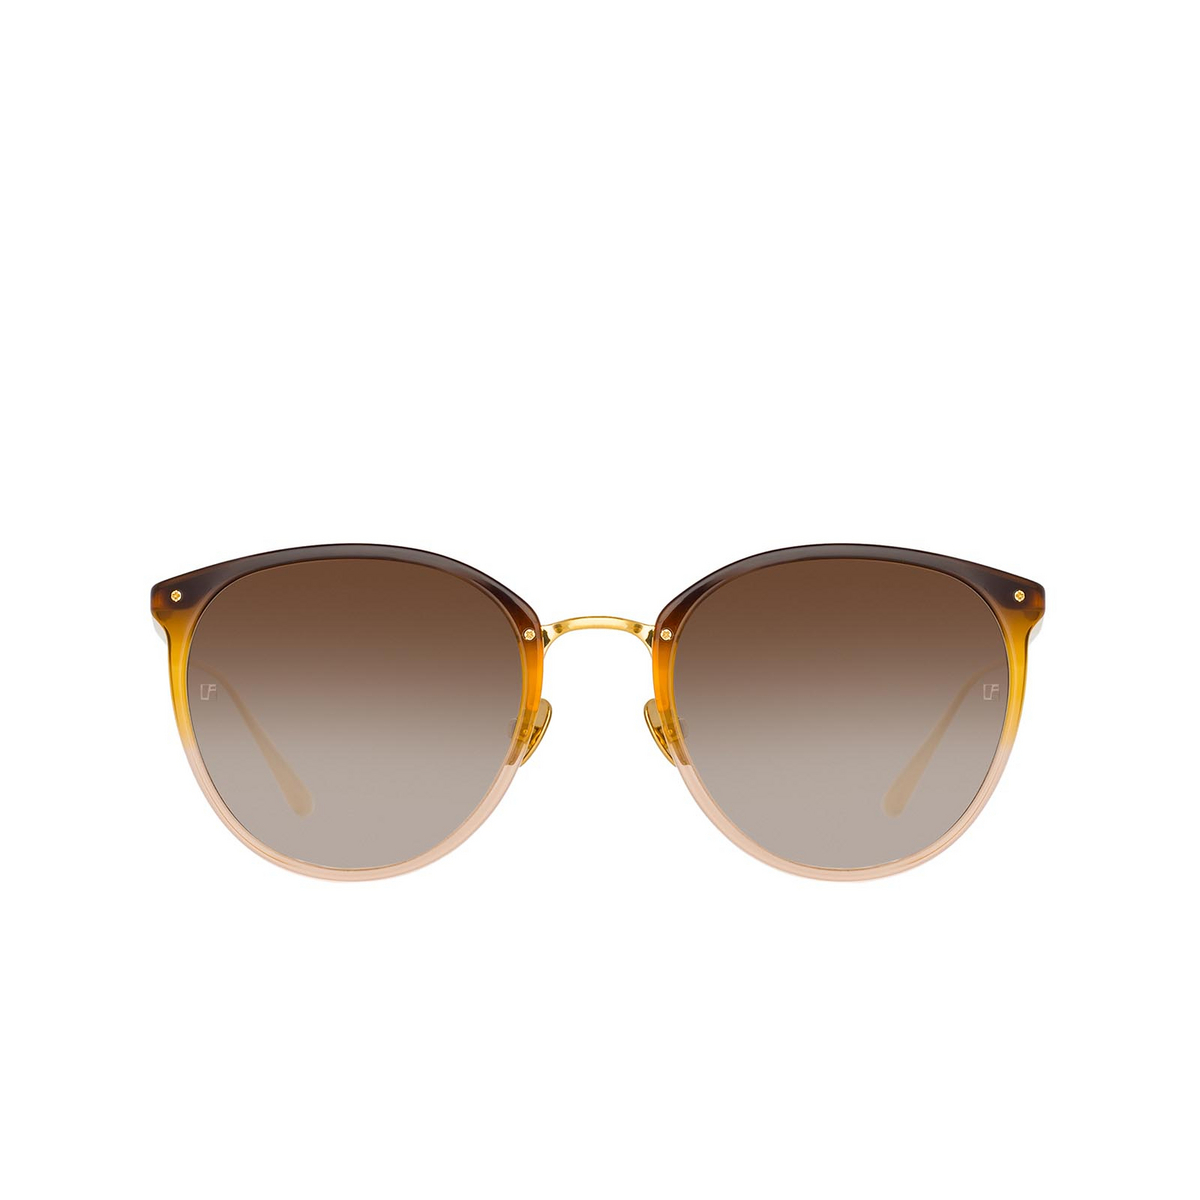 Linda Farrow CALTHORPE Sunglasses 81 Brown Grad / Yellow - front view